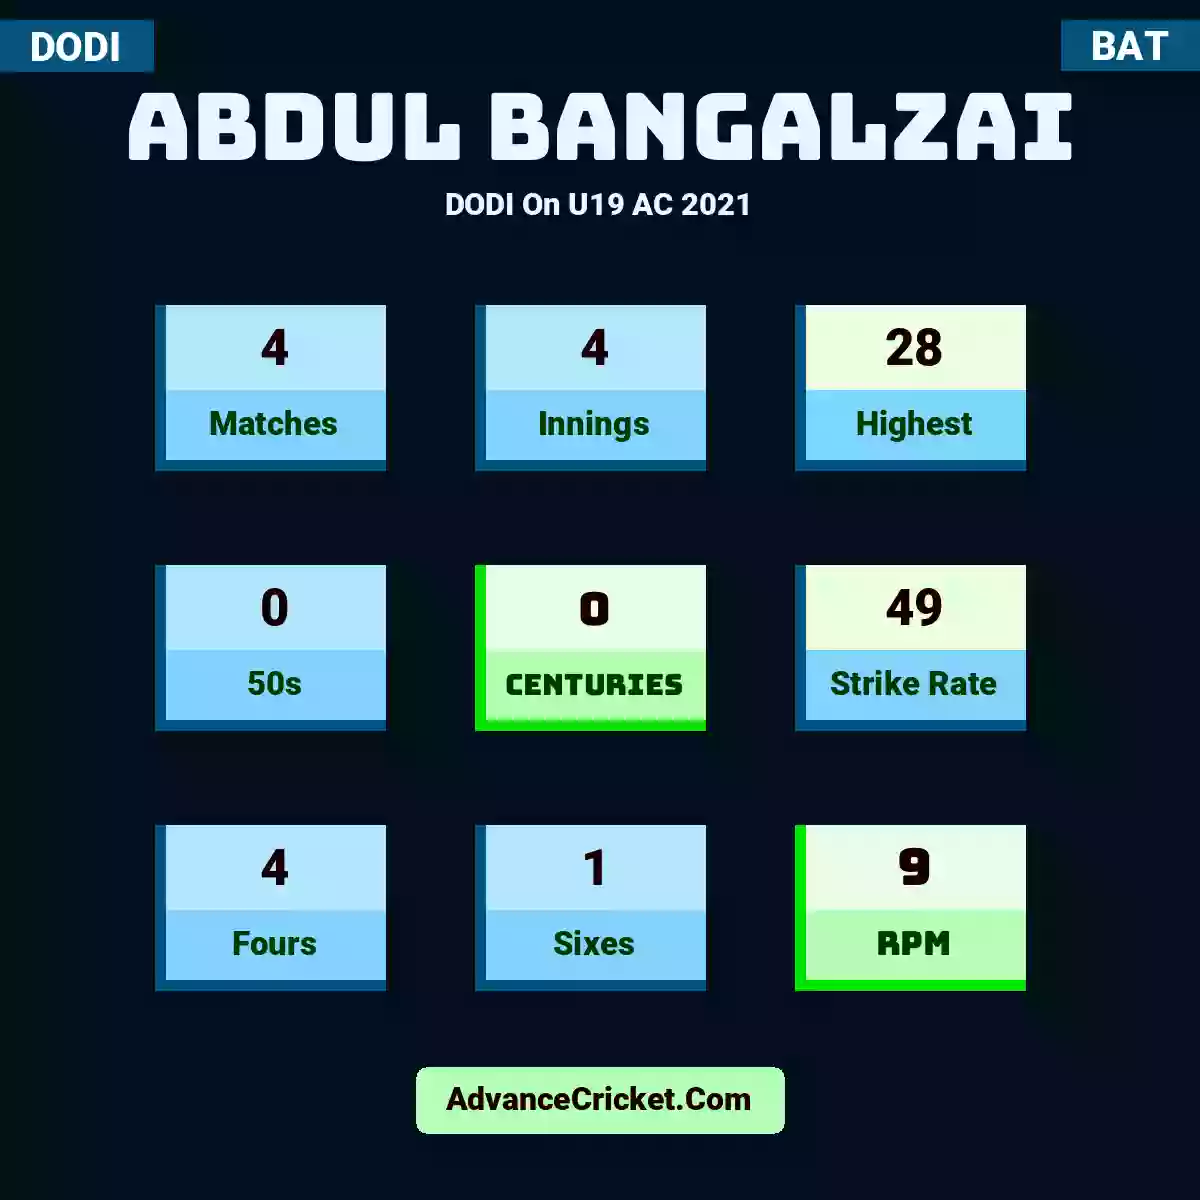 Abdul Bangalzai DODI  On U19 AC 2021, Abdul Bangalzai played 4 matches, scored 28 runs as highest, 0 half-centuries, and 0 centuries, with a strike rate of 49. A.Bangalzai hit 4 fours and 1 sixes, with an RPM of 9.